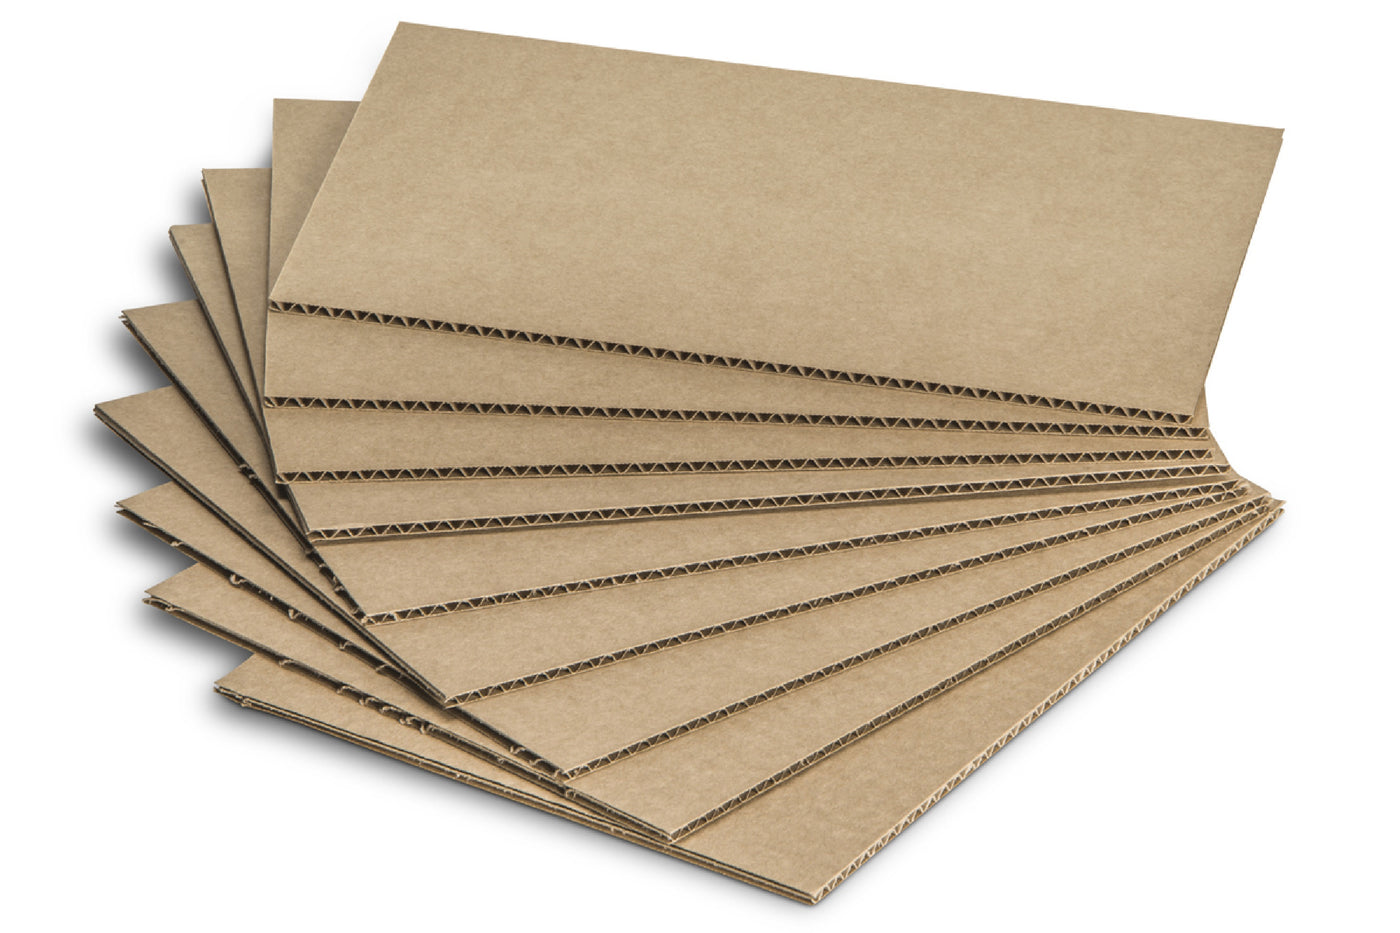 Corrugated Cardboard Sheets, Rolls & Pads